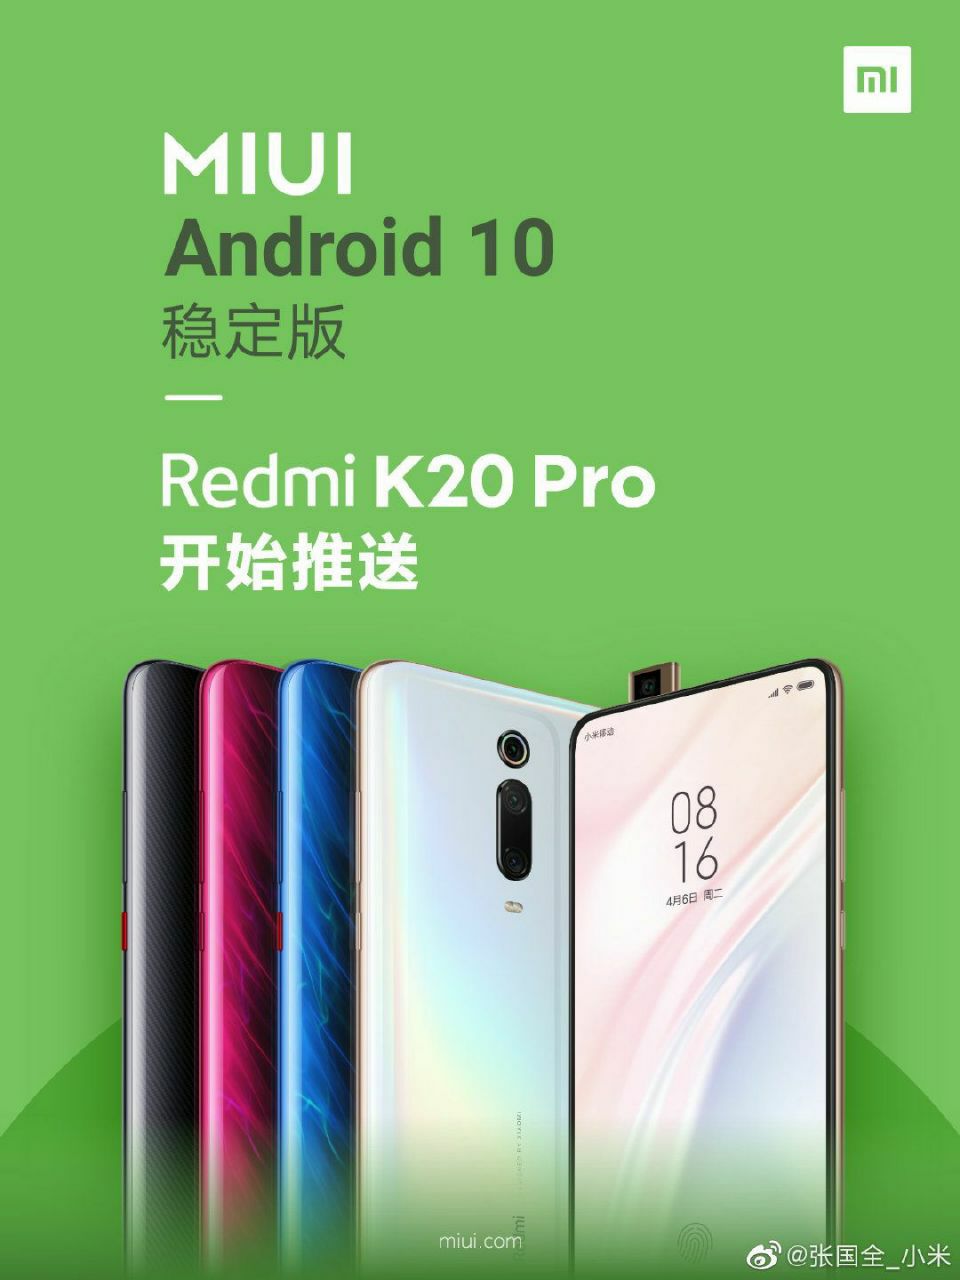 Redmi K20 pro уже получает Android 10